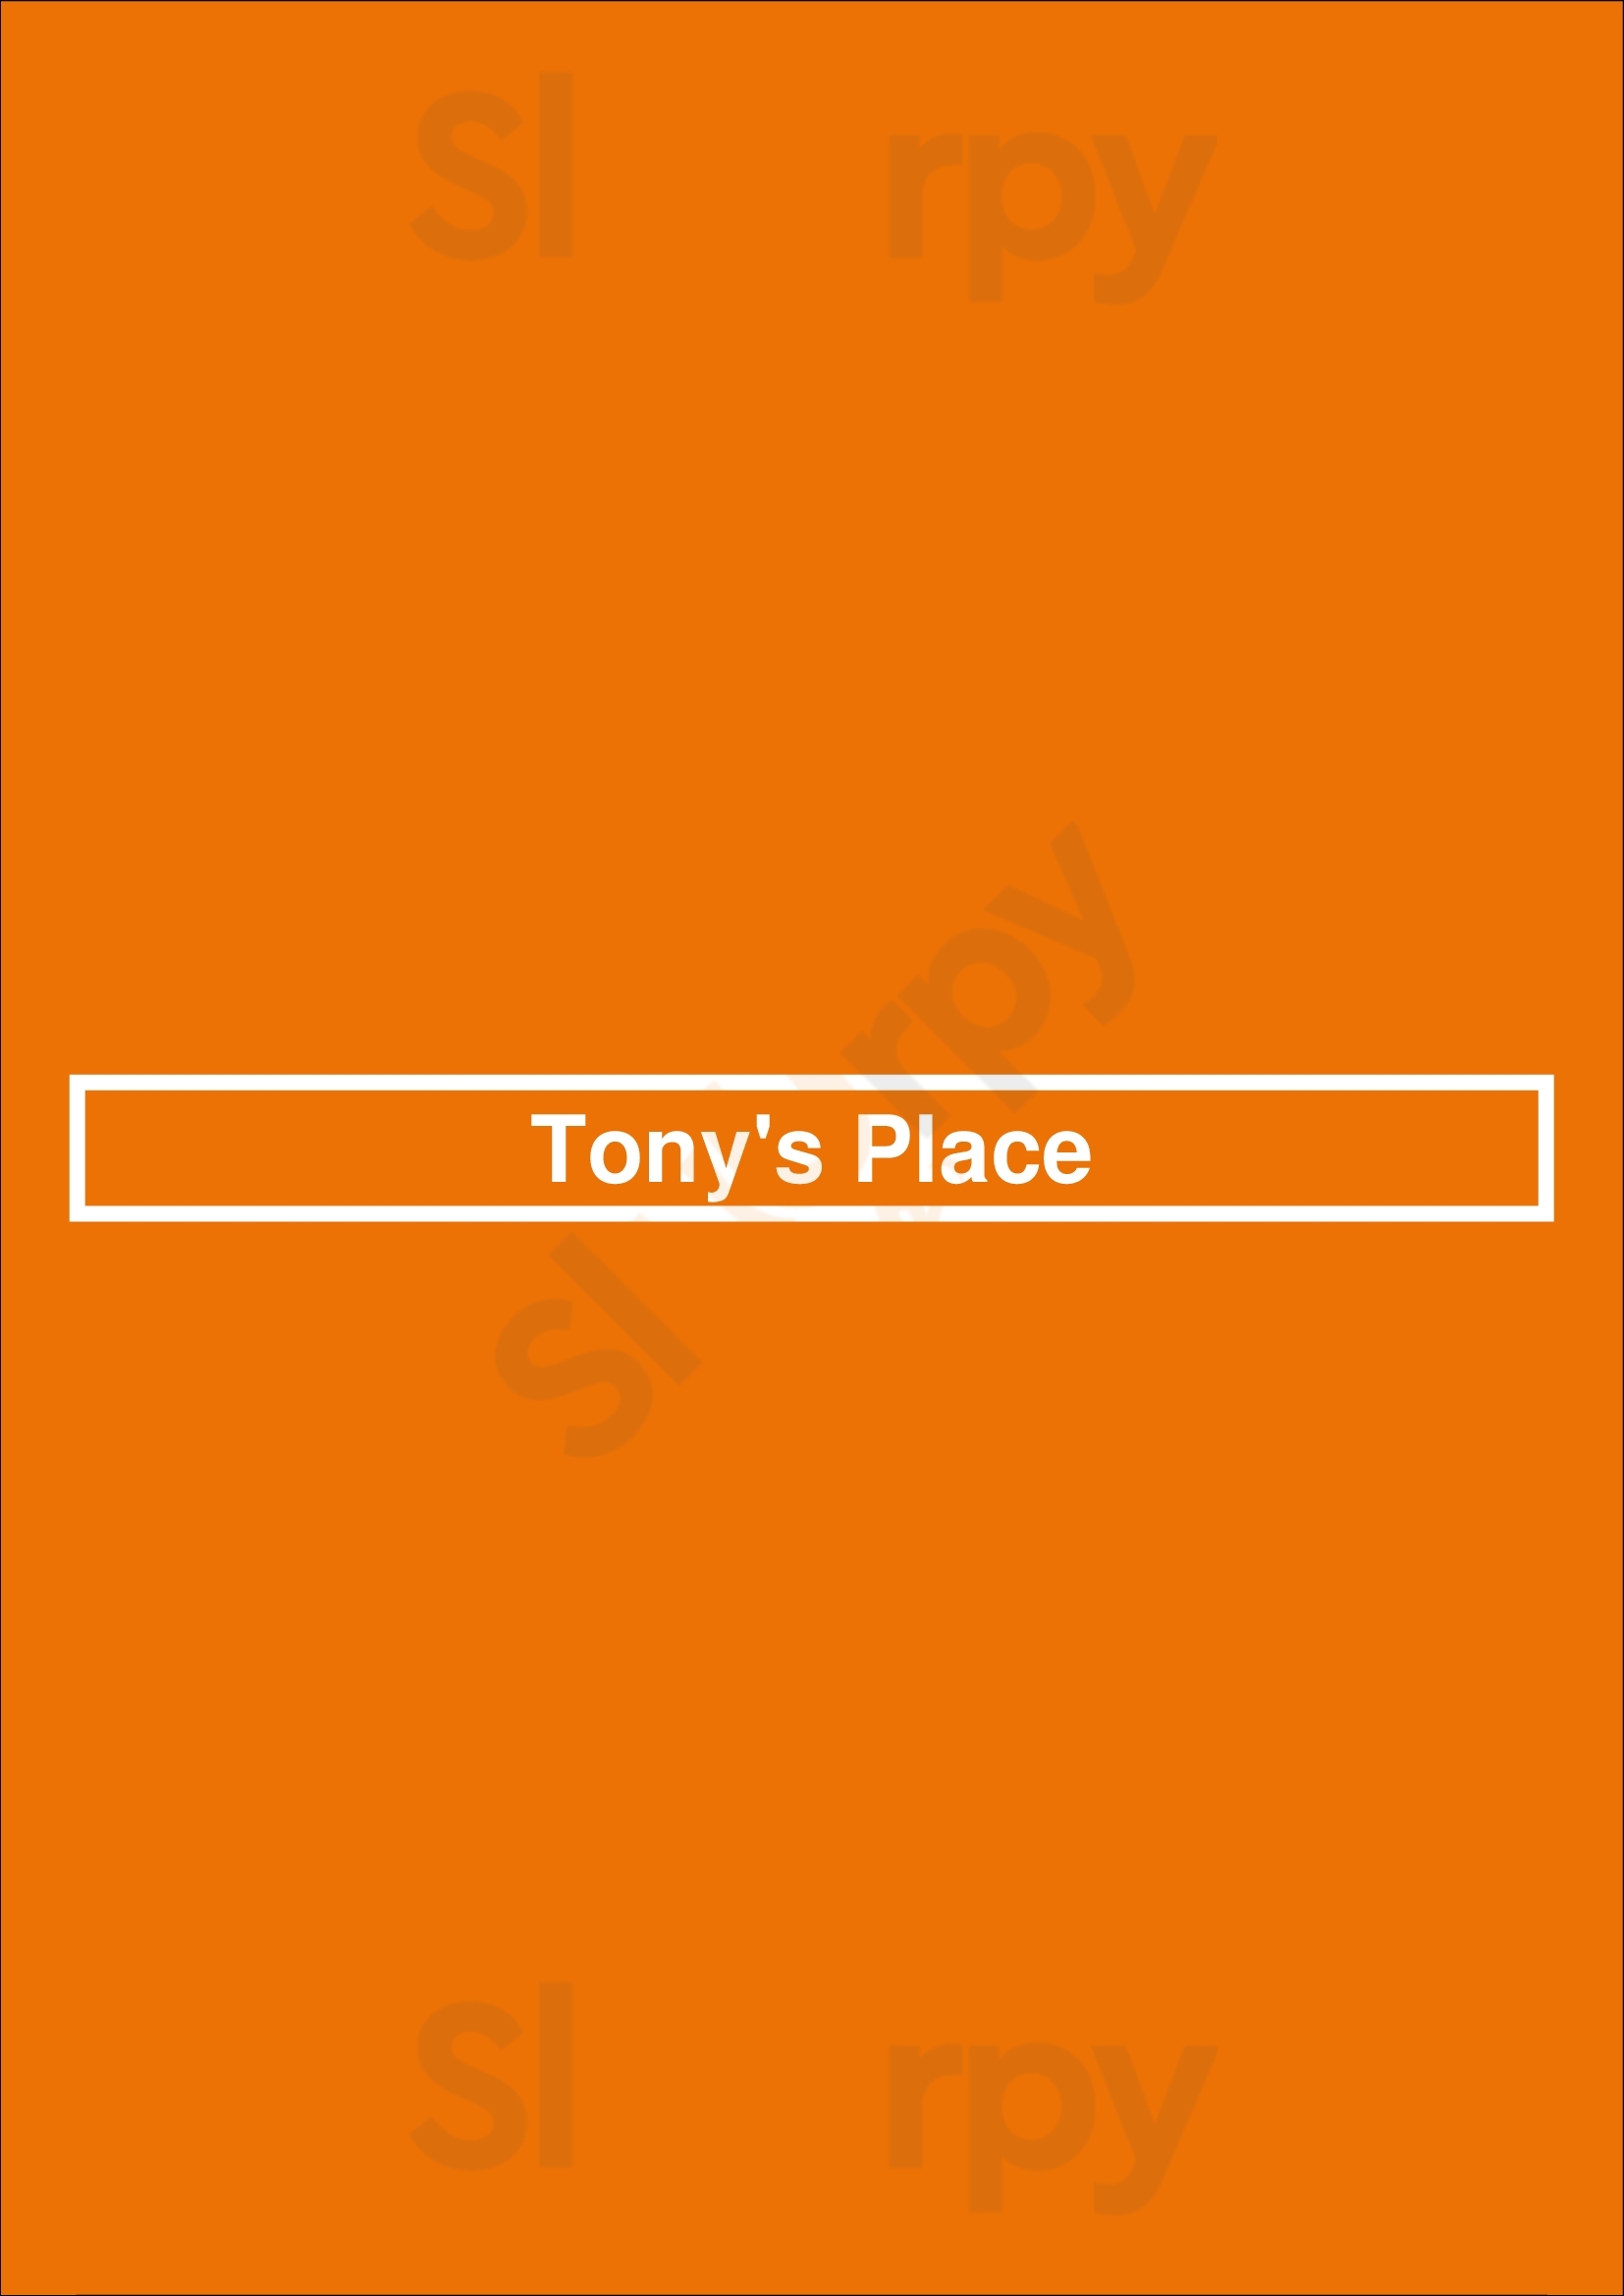 Tony's Place Washington DC Menu - 1